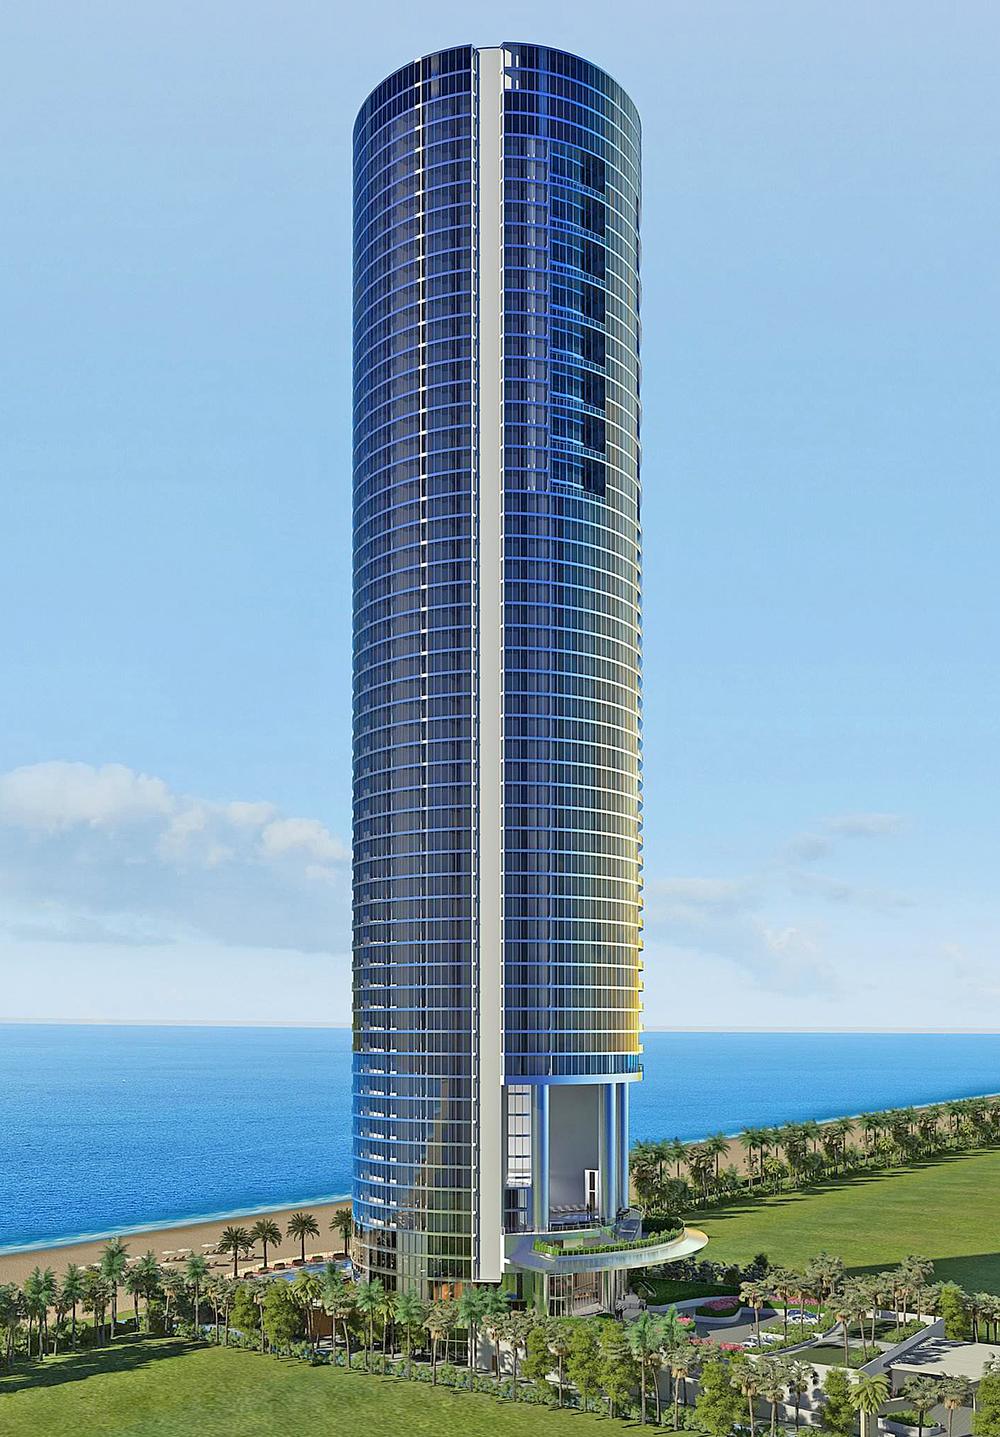 Porsche has designed a 60-storey residential highrise in Miami, Florida